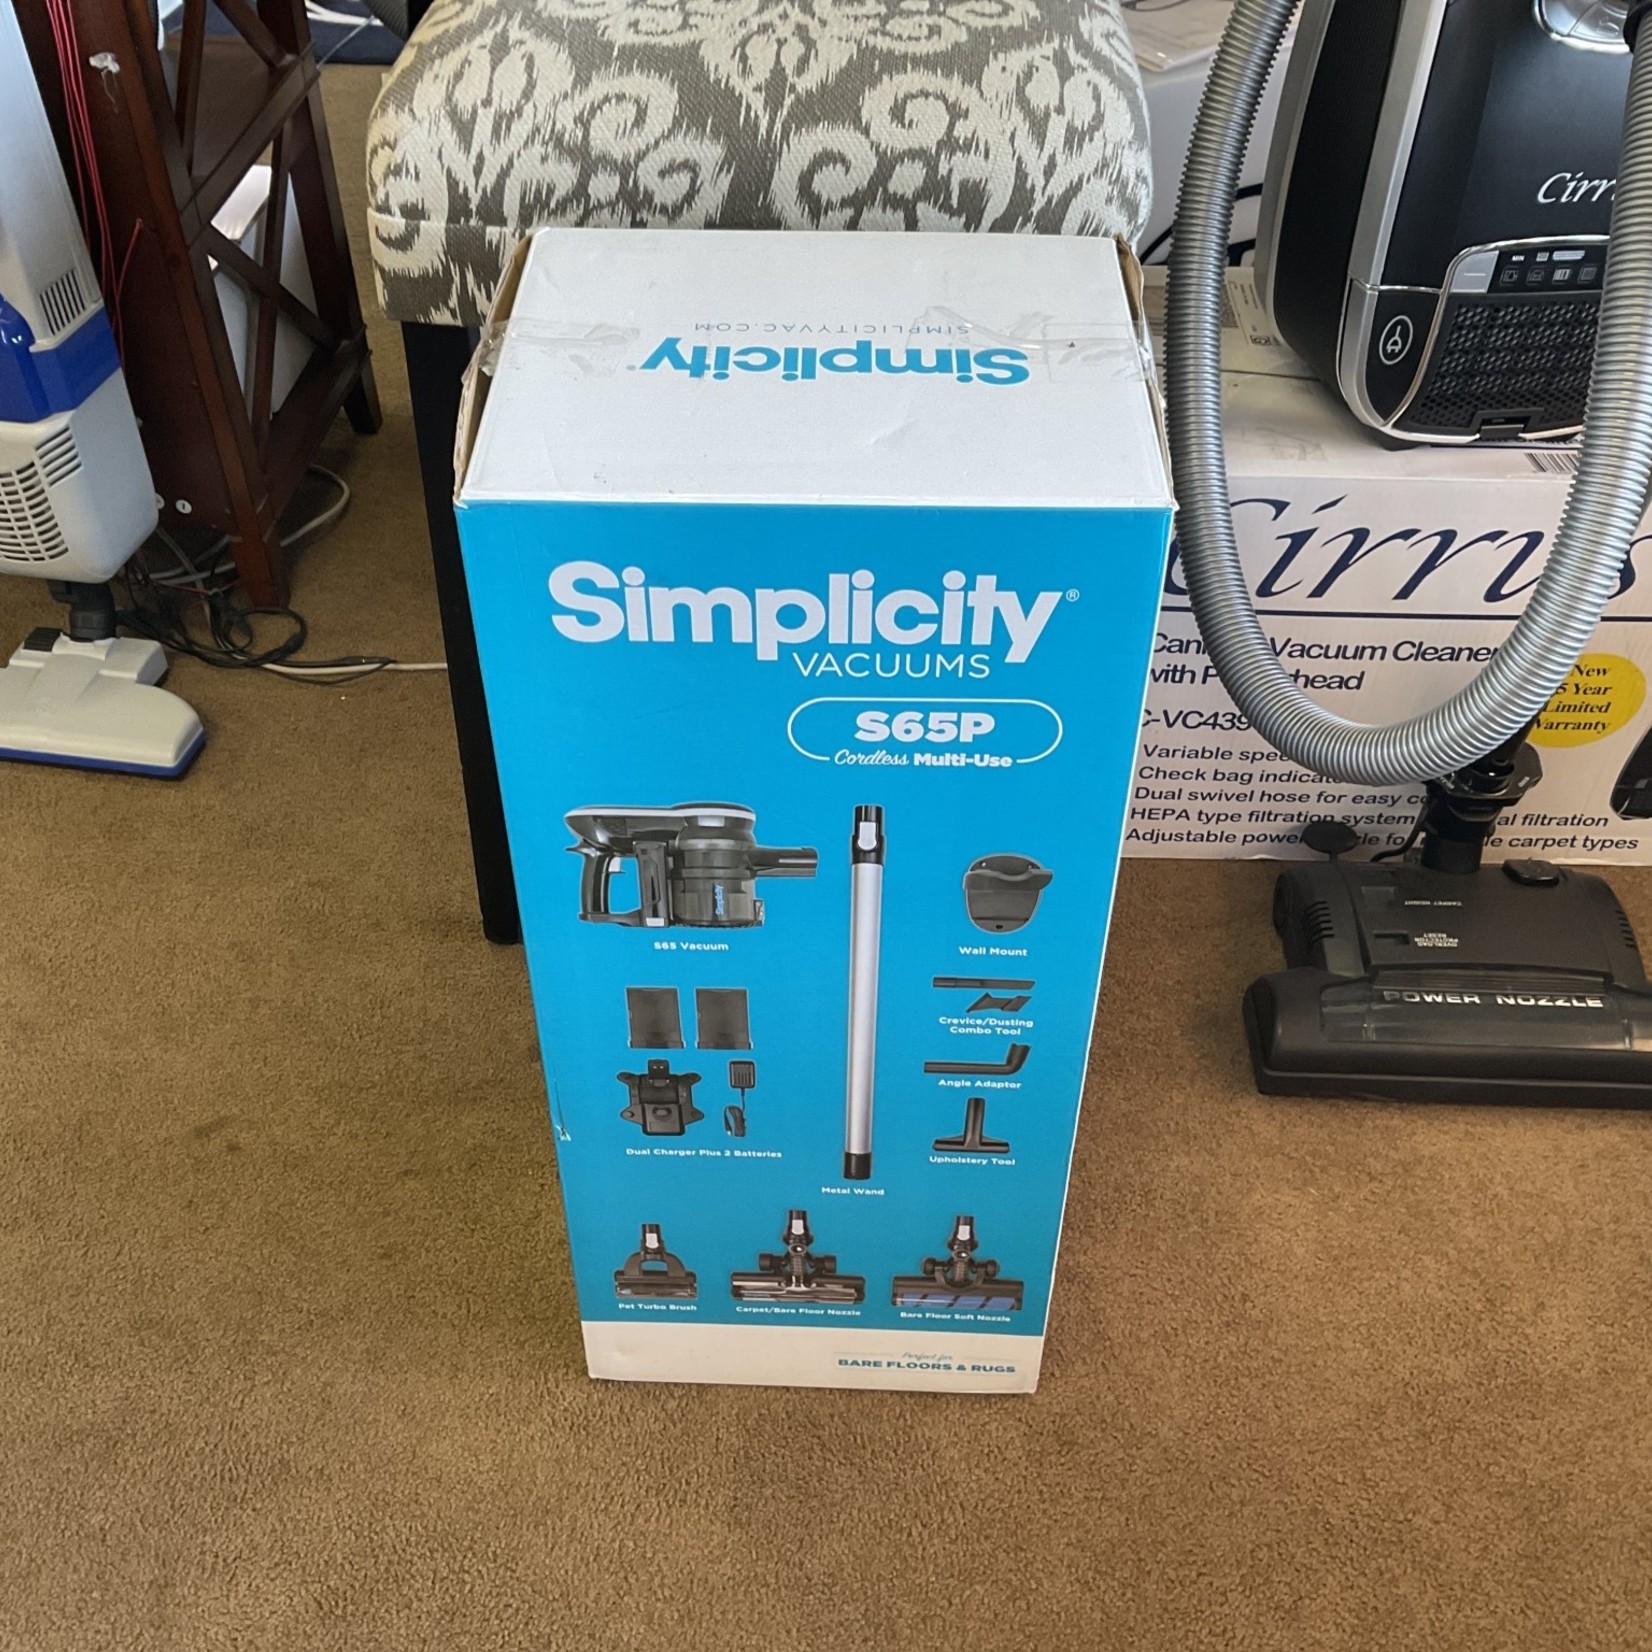 Simplicity Simplicity Vacuums S65P